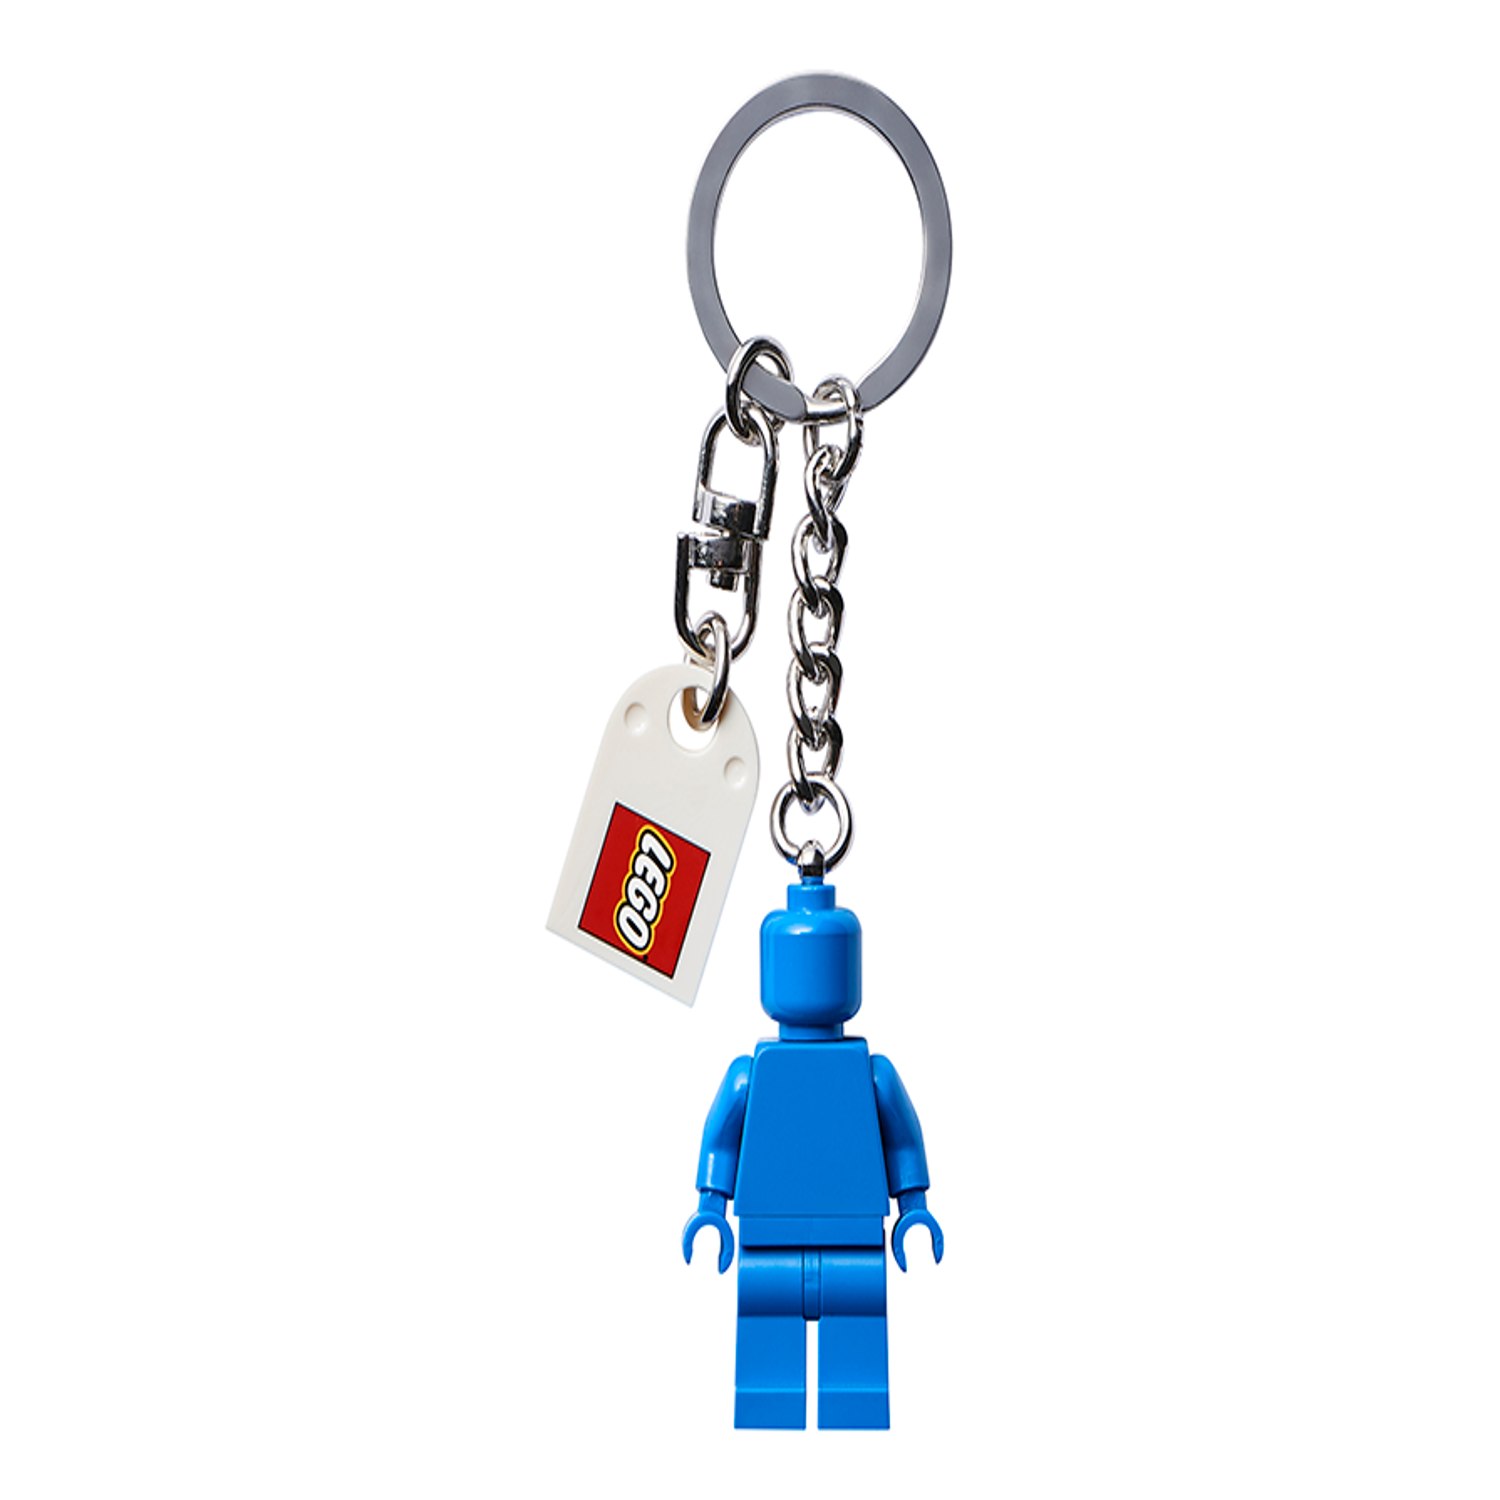 Lego Key Holder Background, Key Chain, Keychain, Key Holder Background  Image And Wallpaper for Free Download